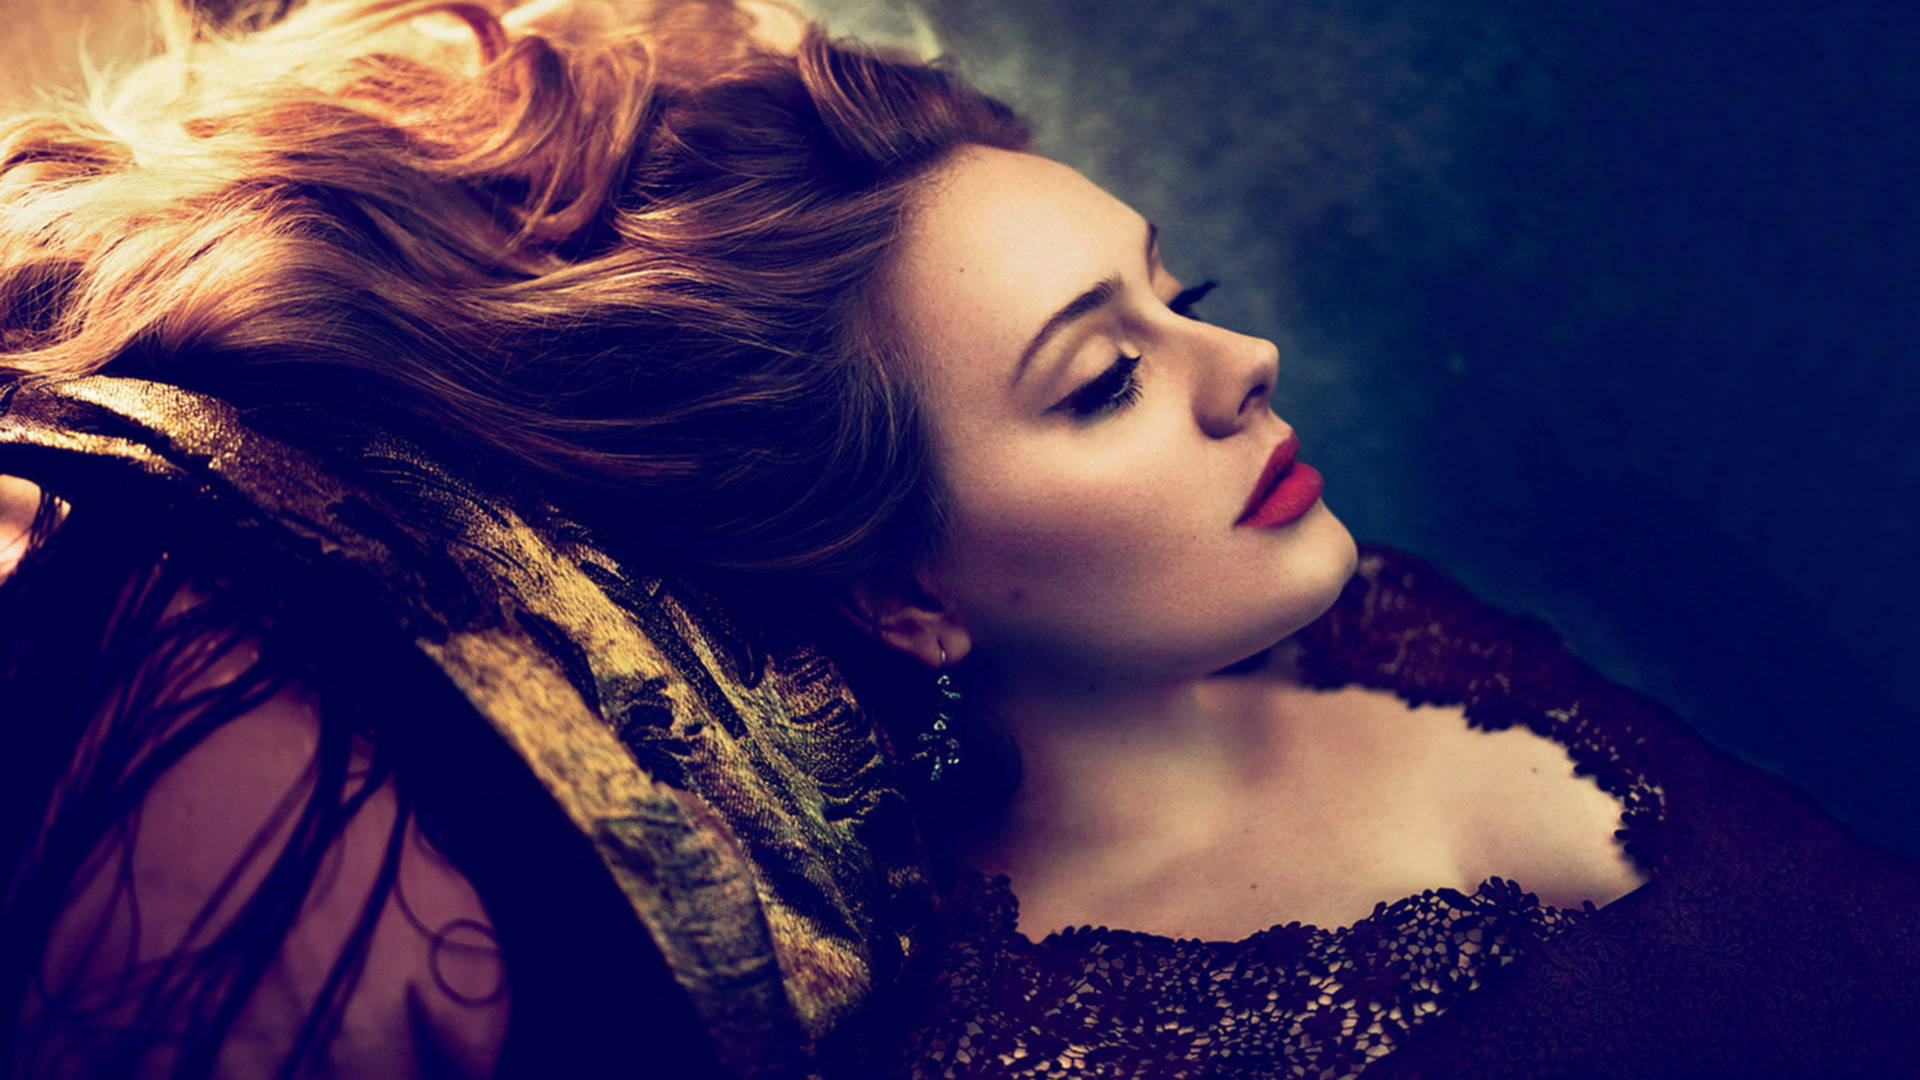 Adele Vogue Photoshoot Wallpaper